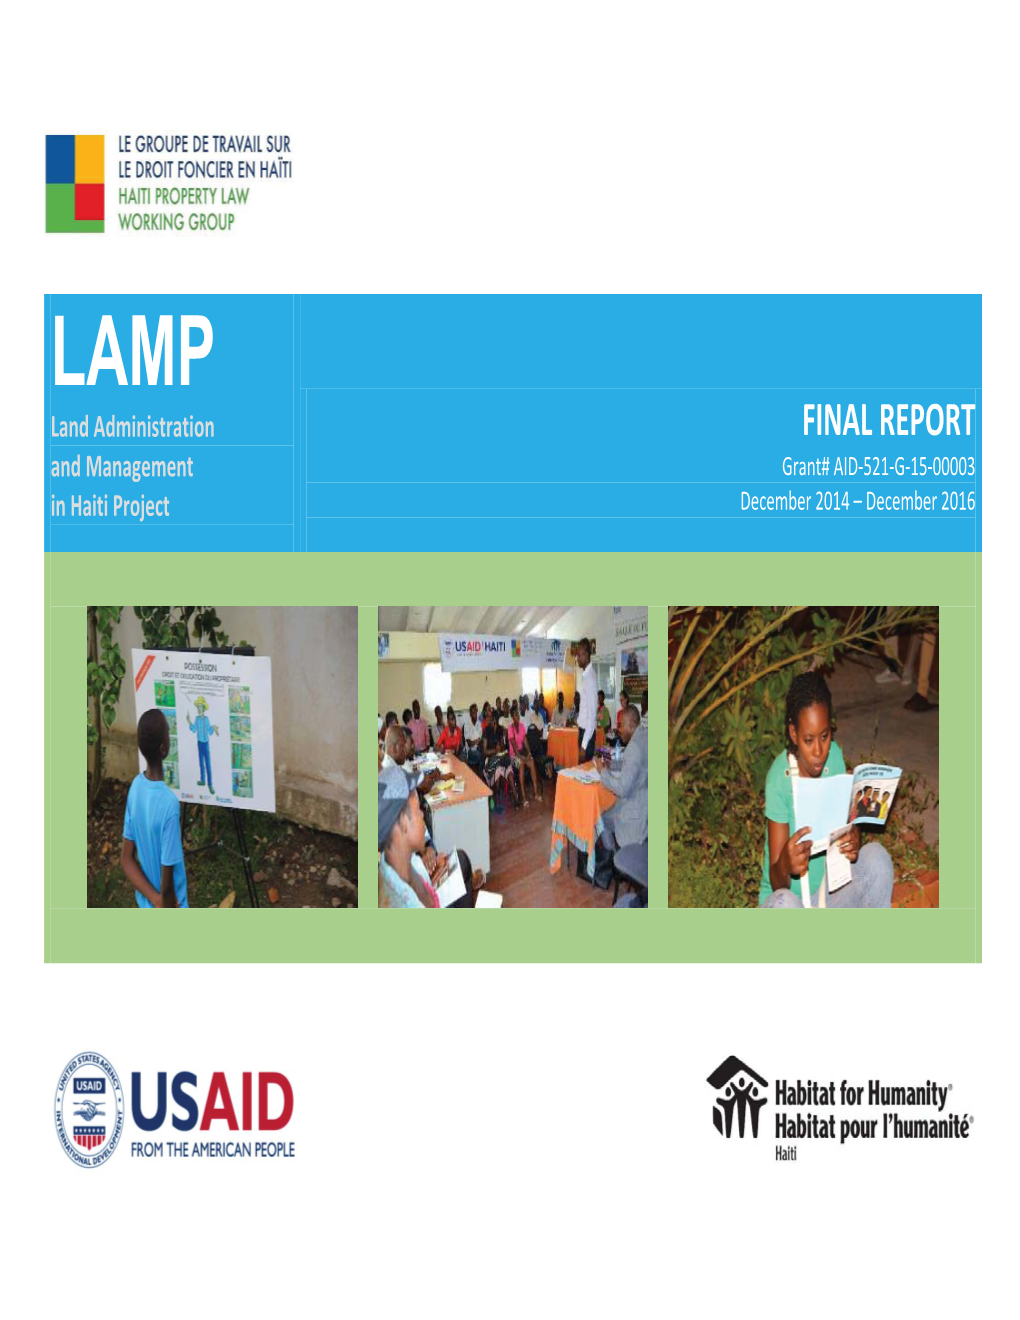 LAMP Haiti Final Report